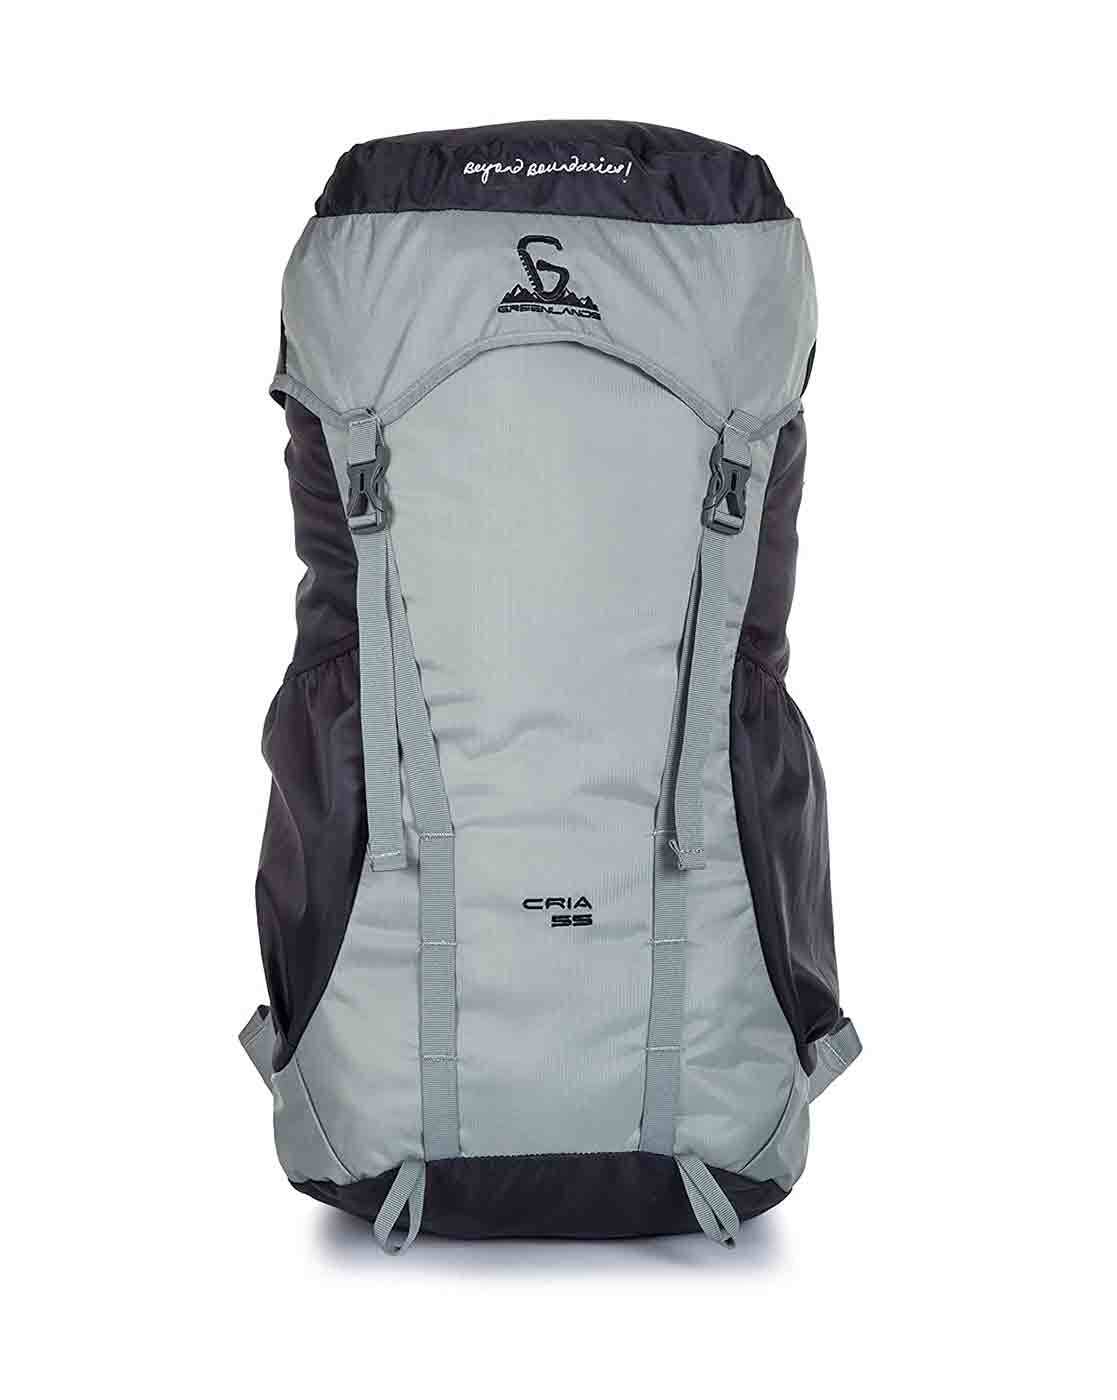 ZERUSRucksack bag travel bag for men tourist bag backpack for hiking  trekking camping Rucksack  70